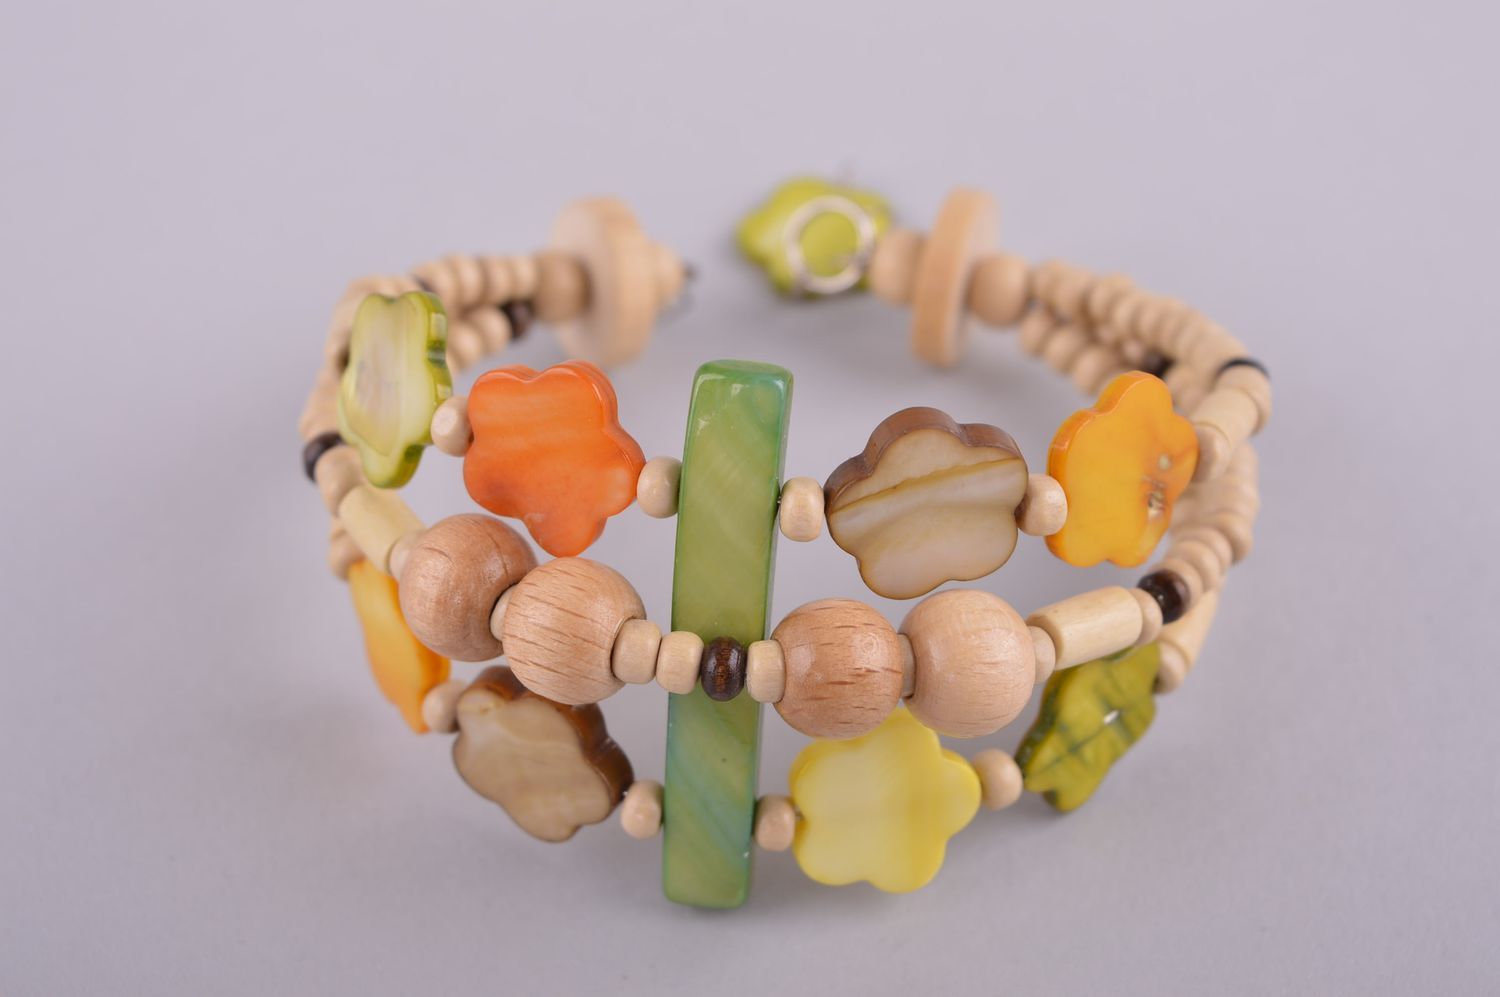 Homemade wooden beads three-row wrist bracelet for women photo 2